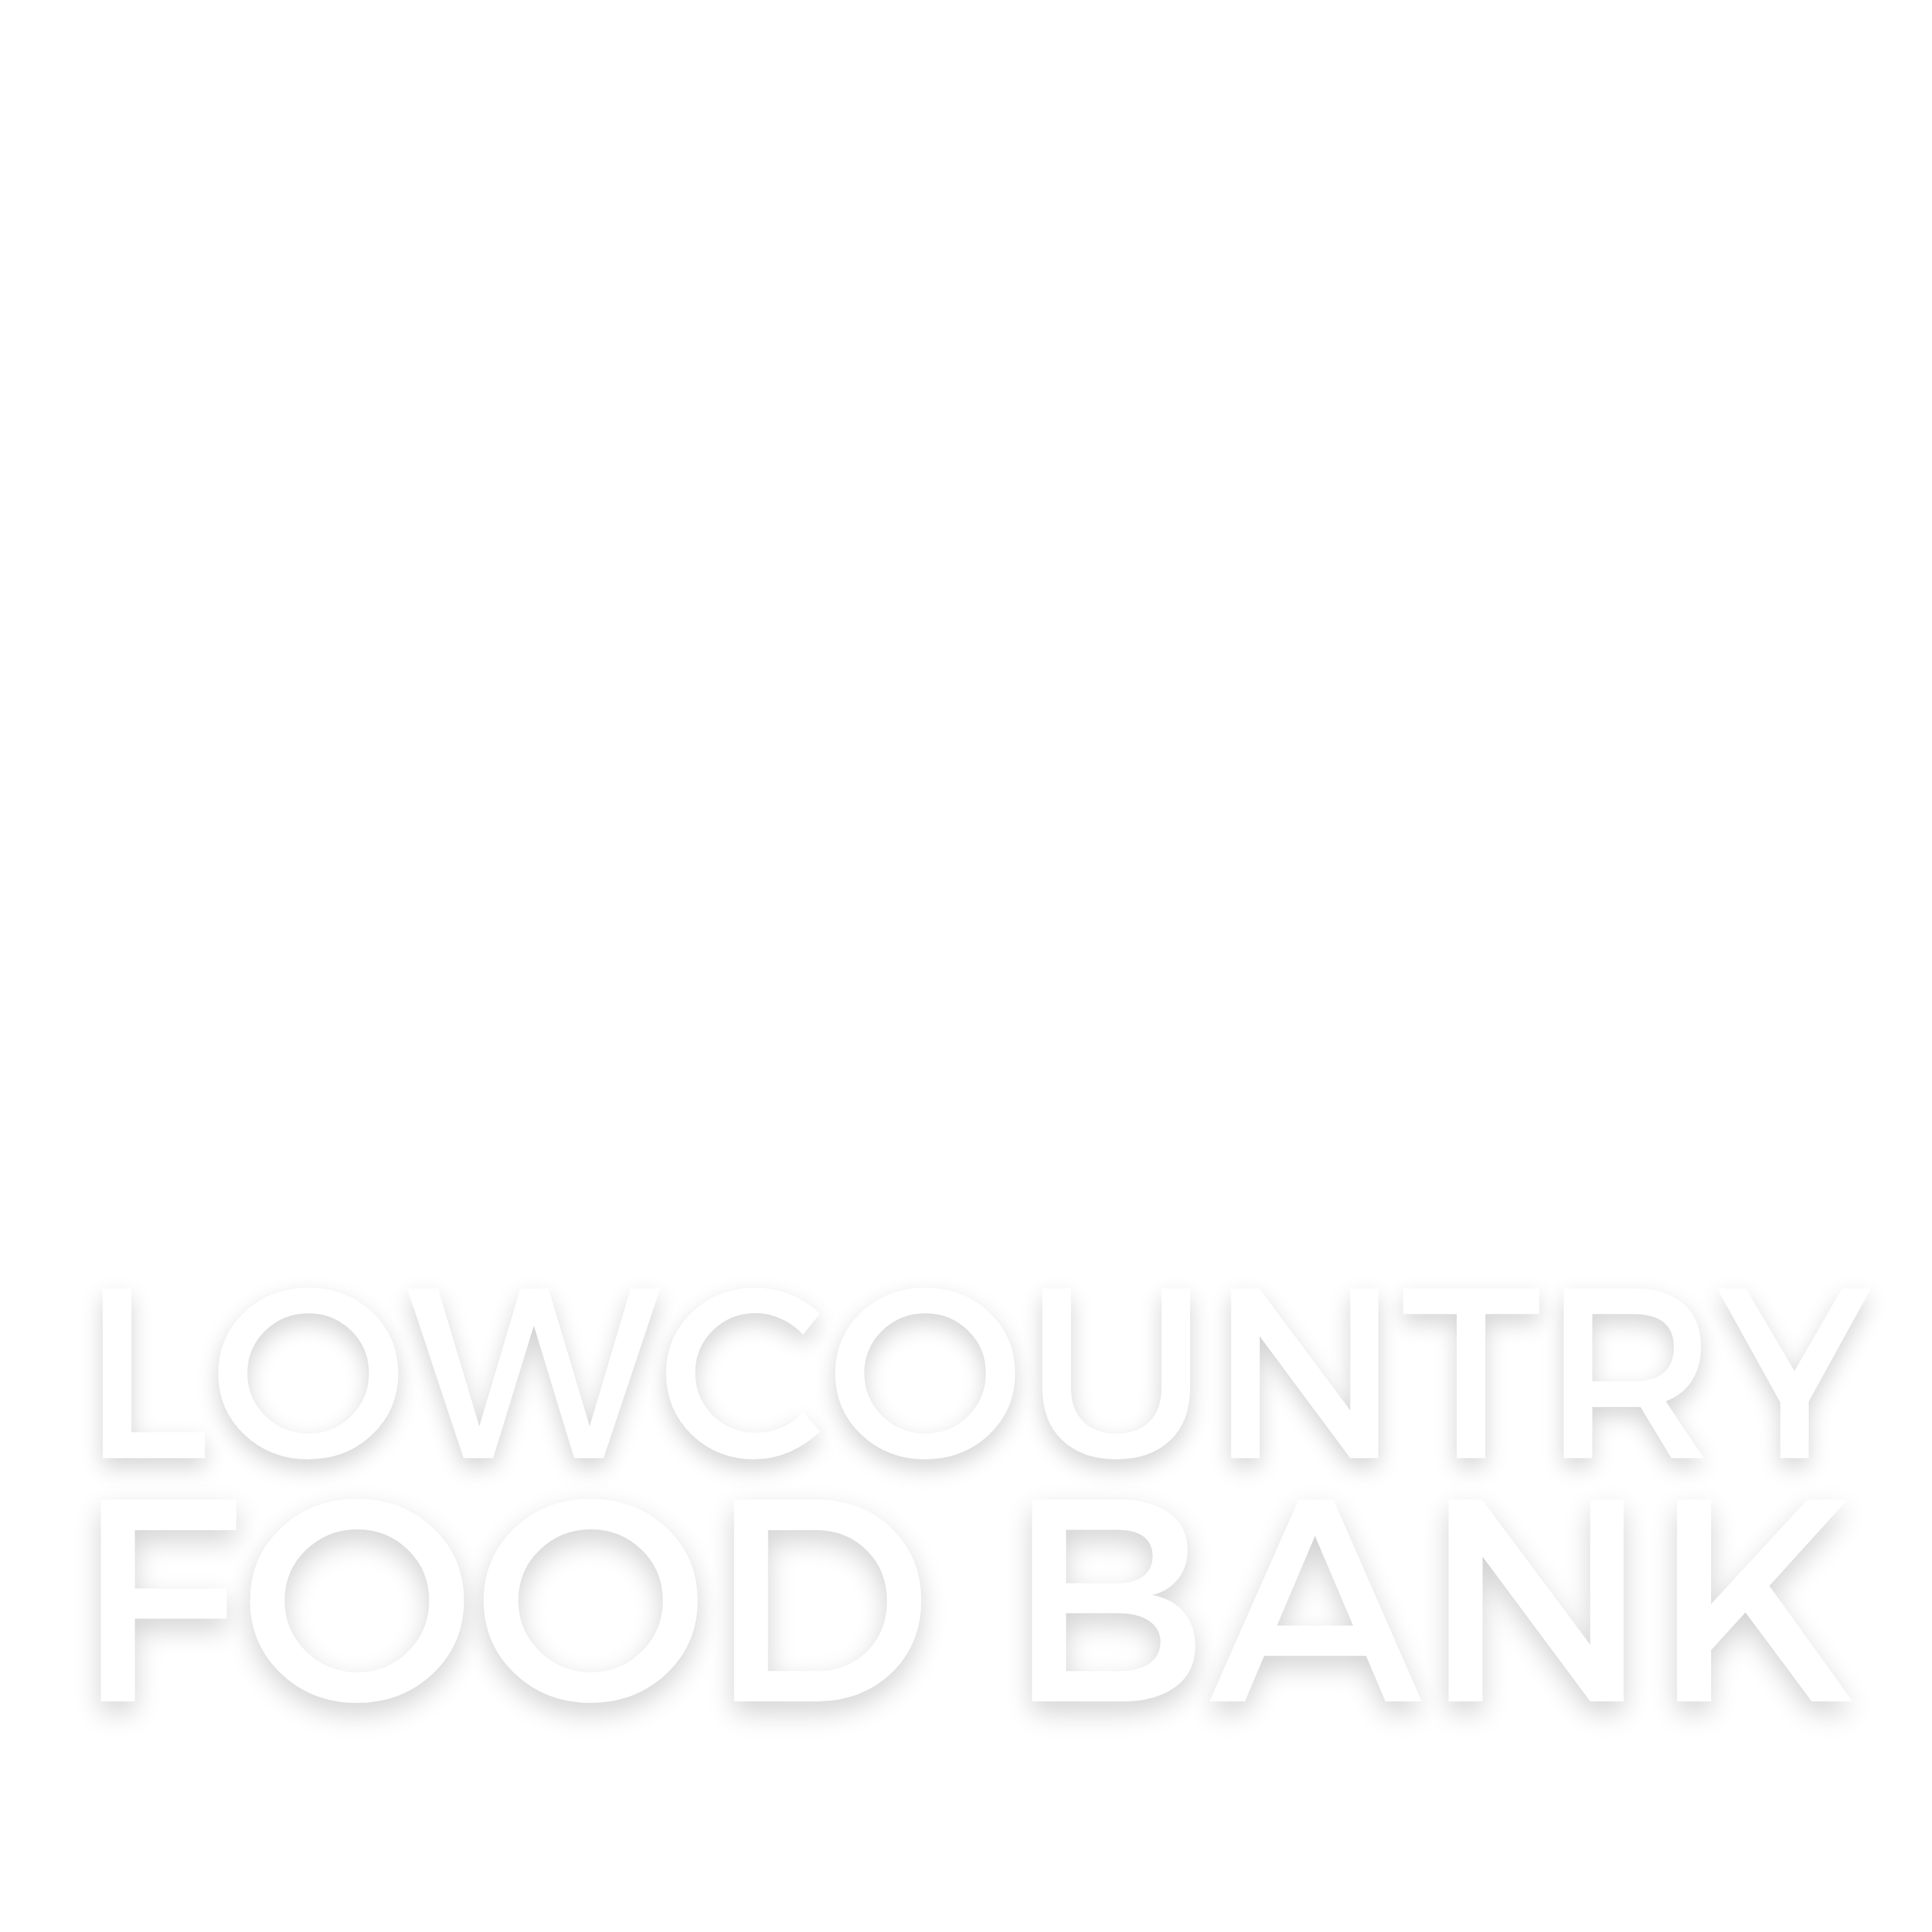 Lowcountry Food Bank – LearnDash